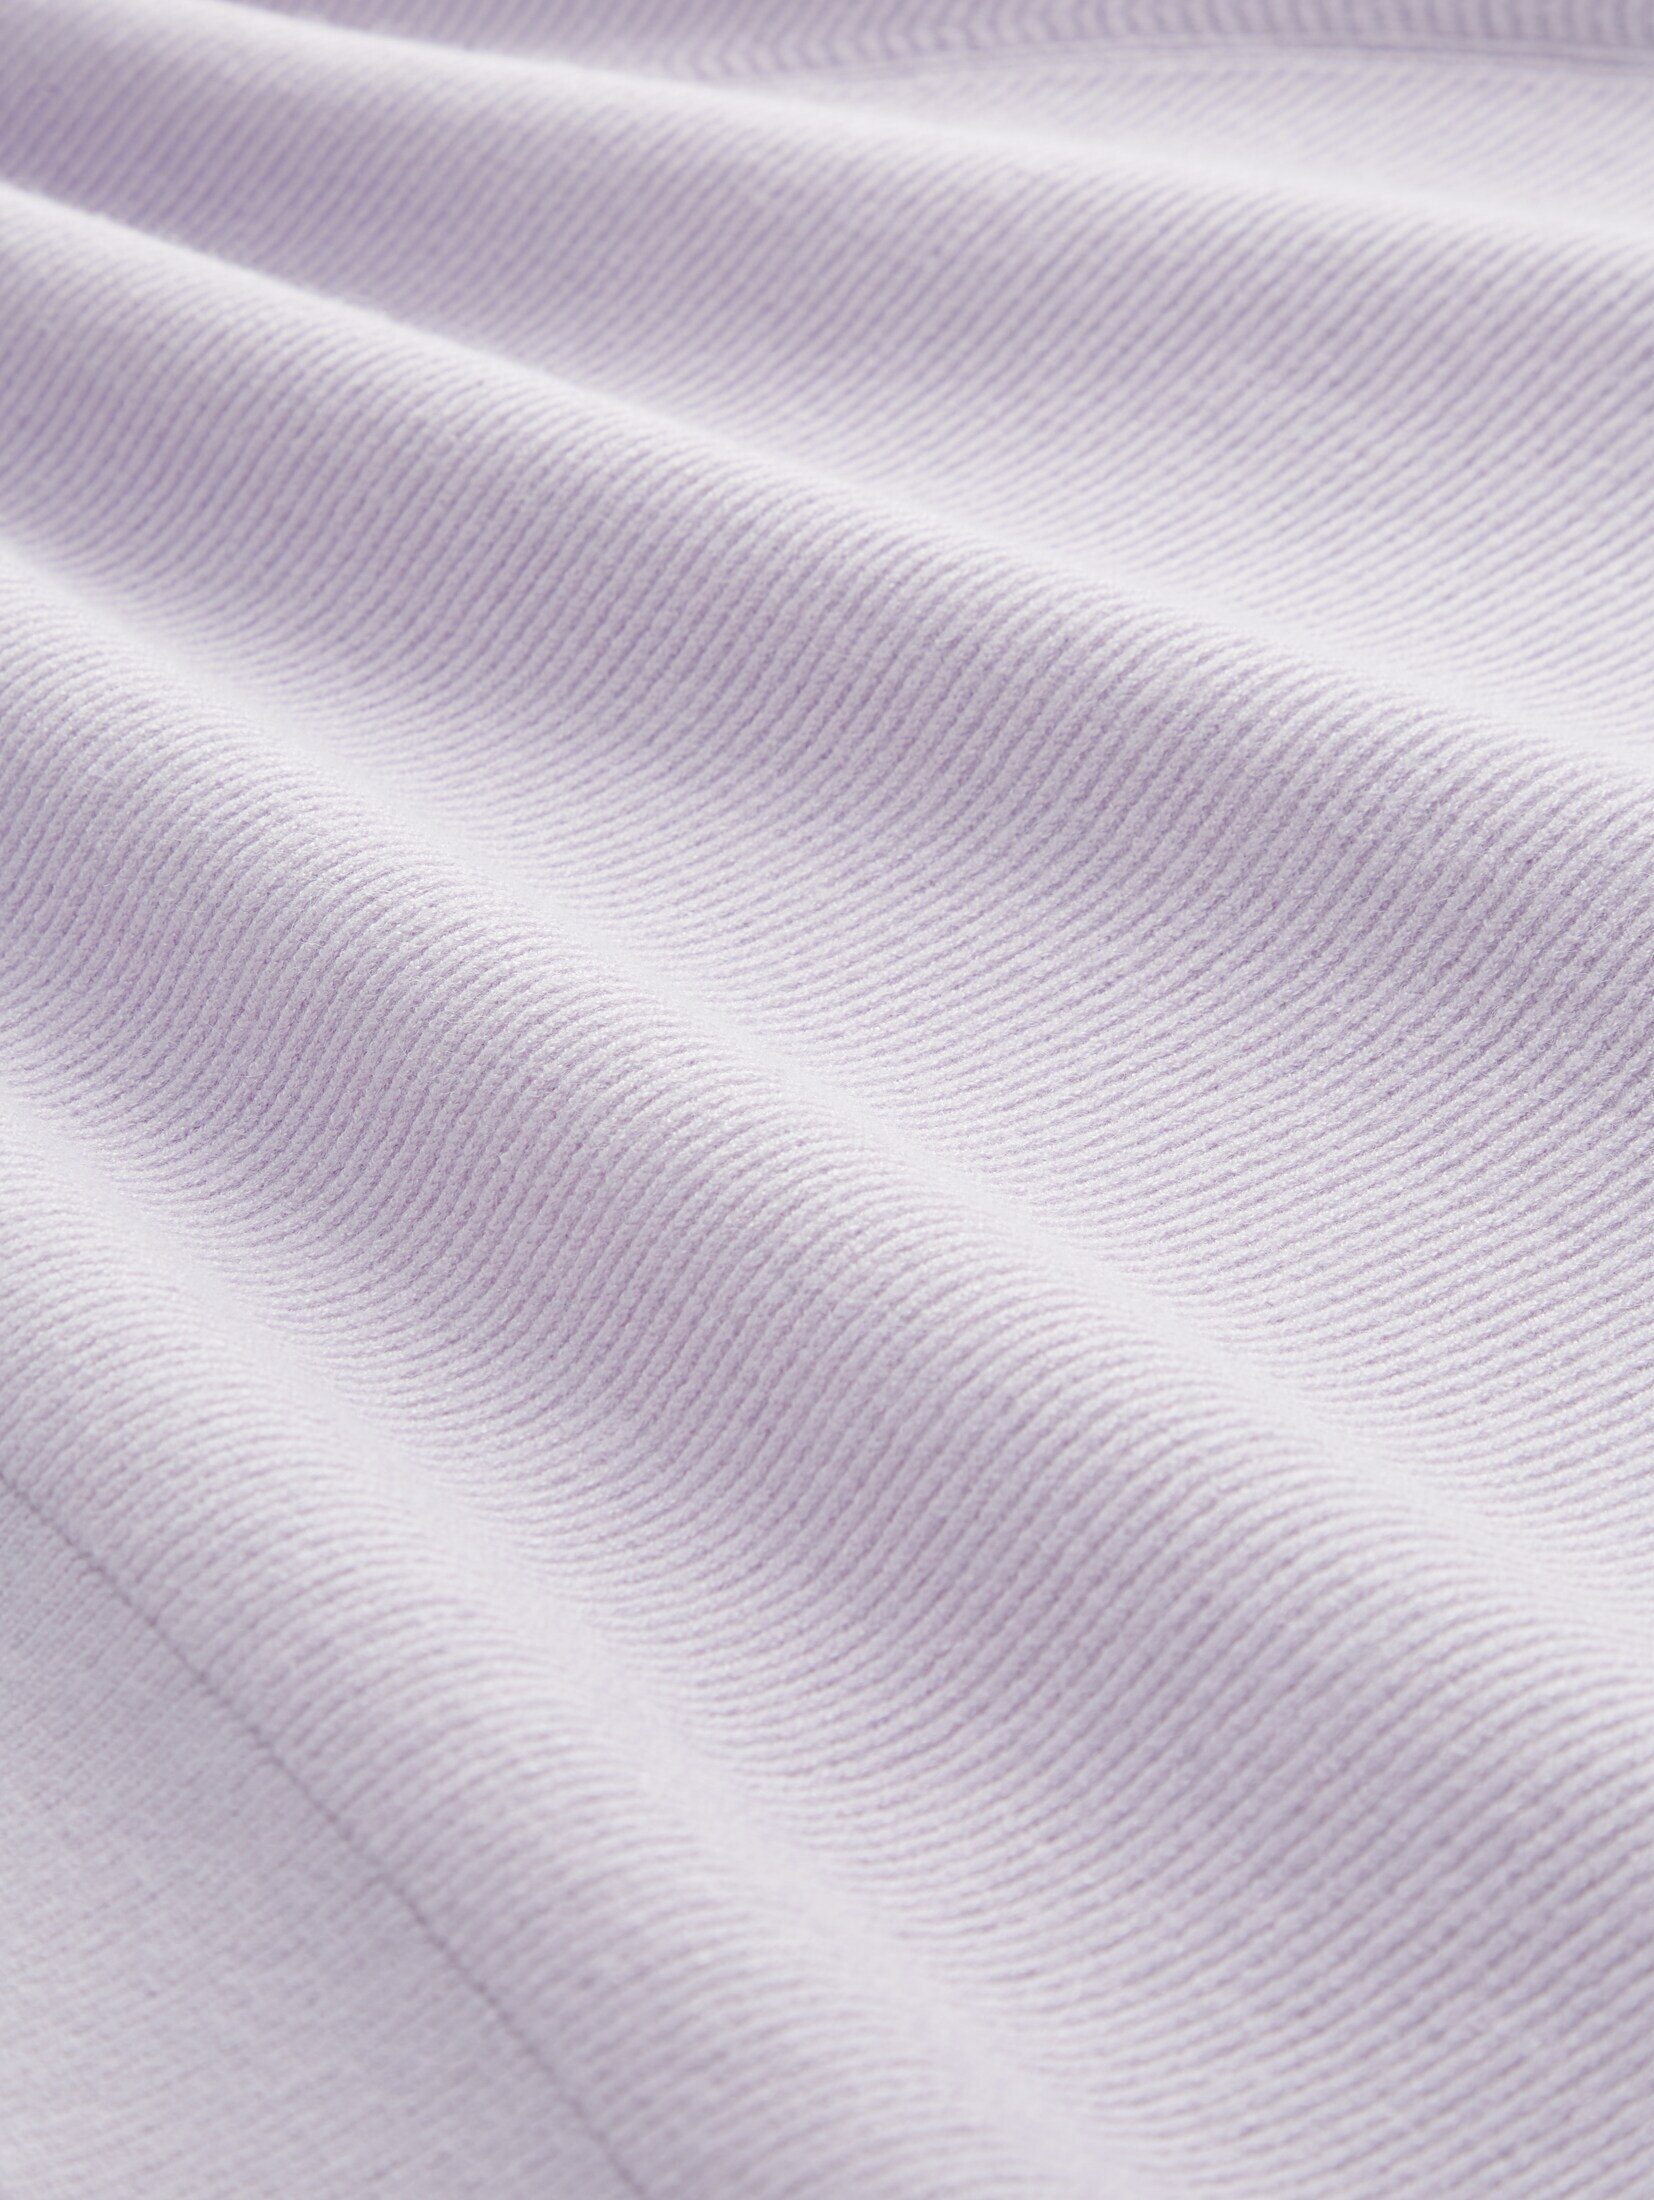 ECOVERO(TM) LENZING(TM) Strickpullover Pullover soft TOM TAILOR Strukturierter Denim lavender mit